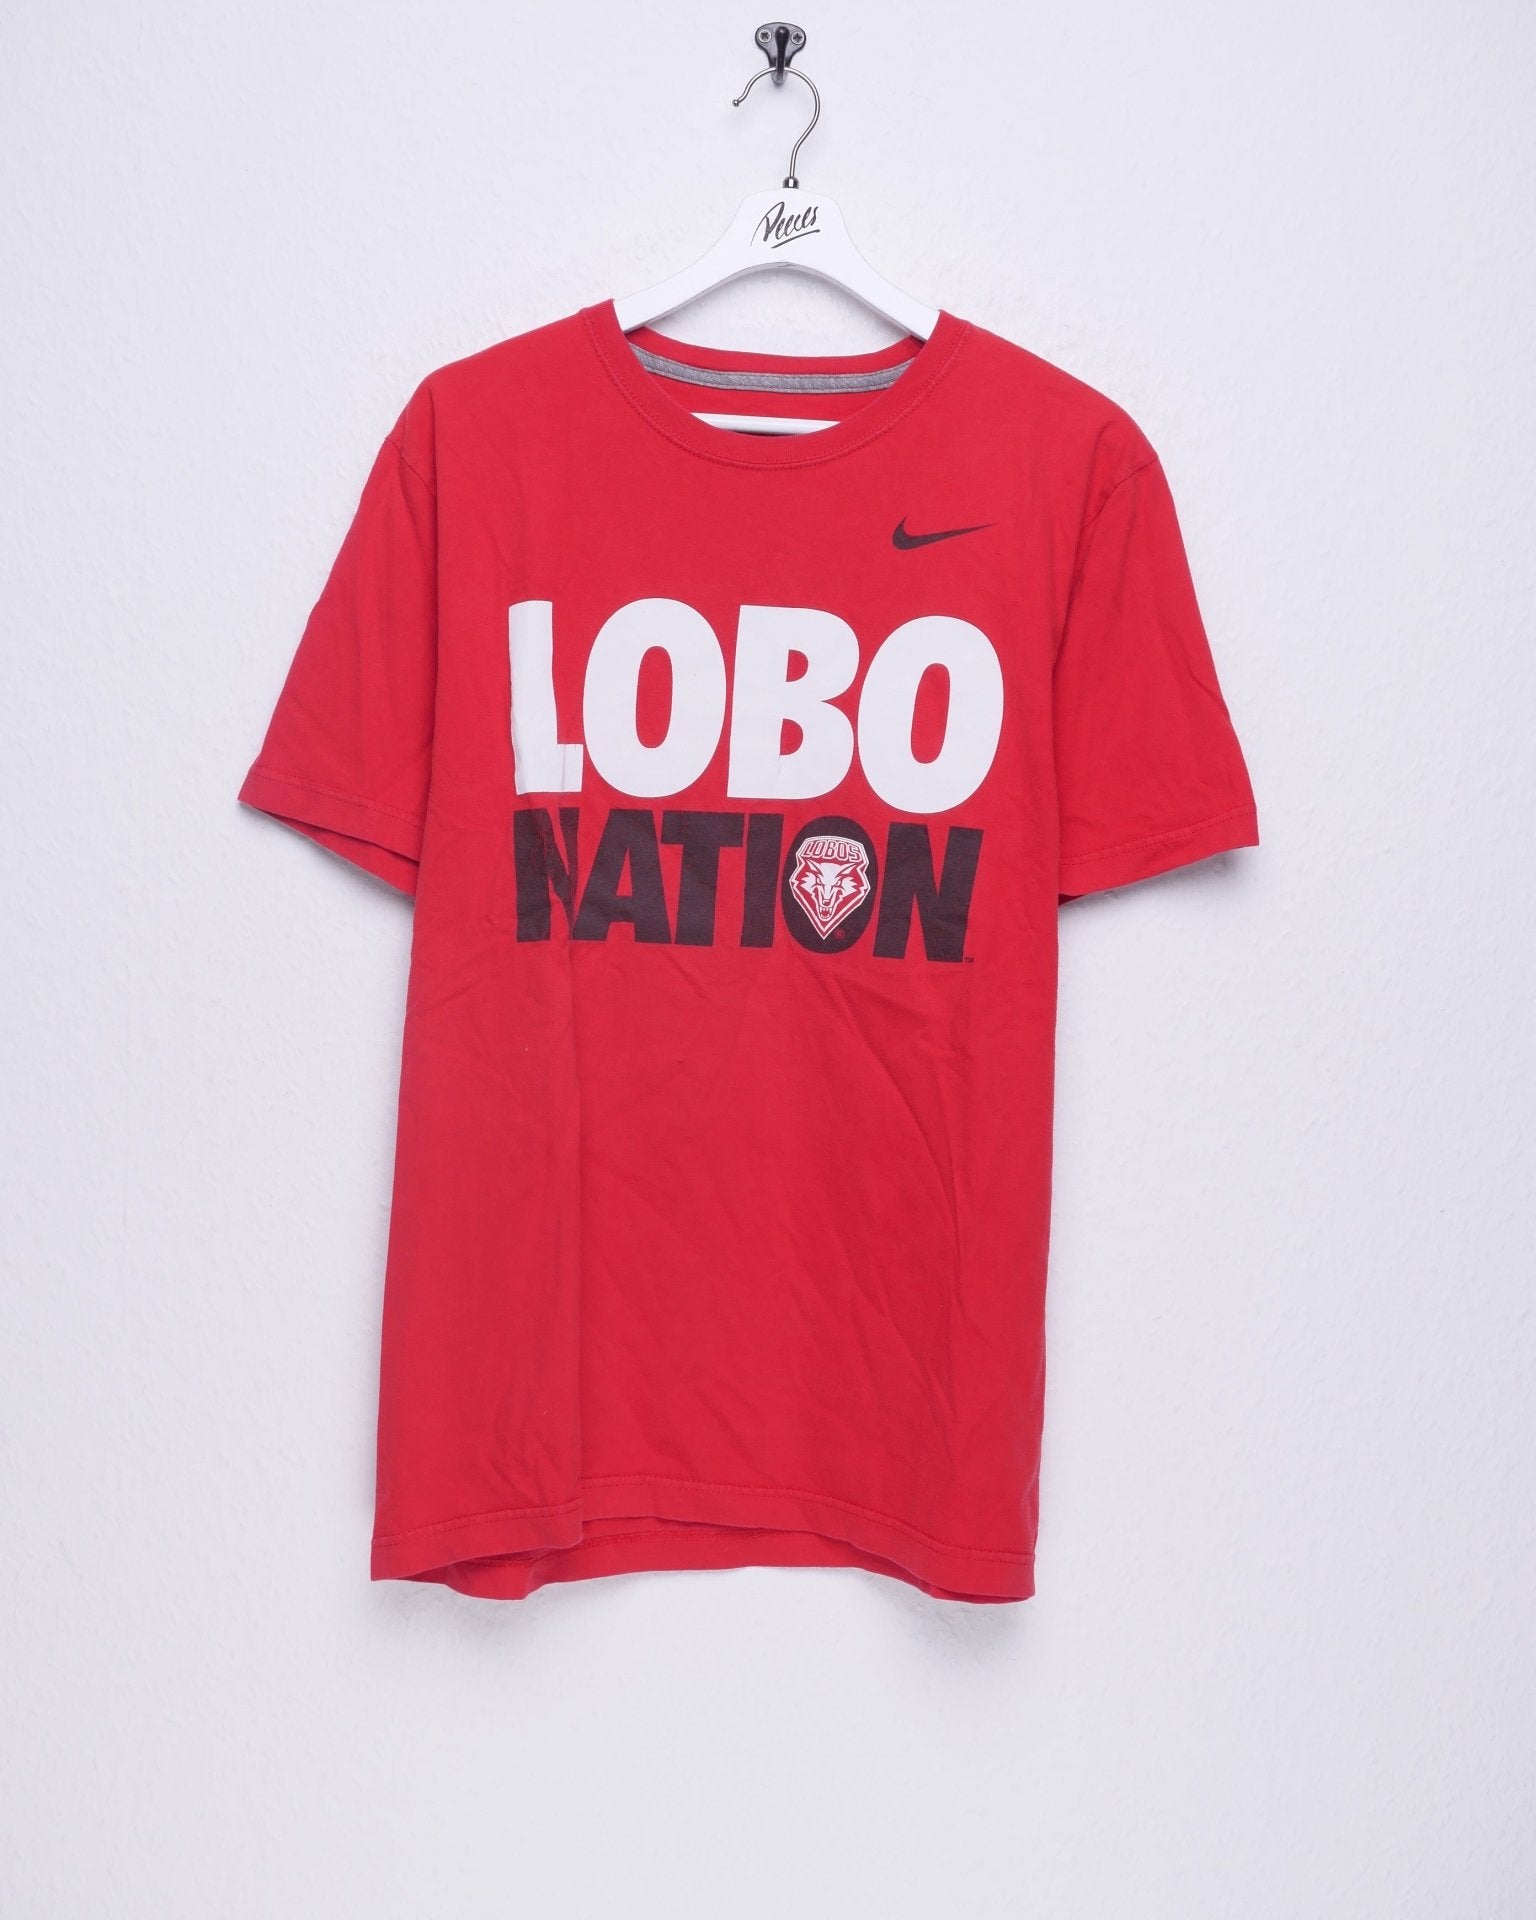 Nike printed Big Logo red Shirt - Peeces